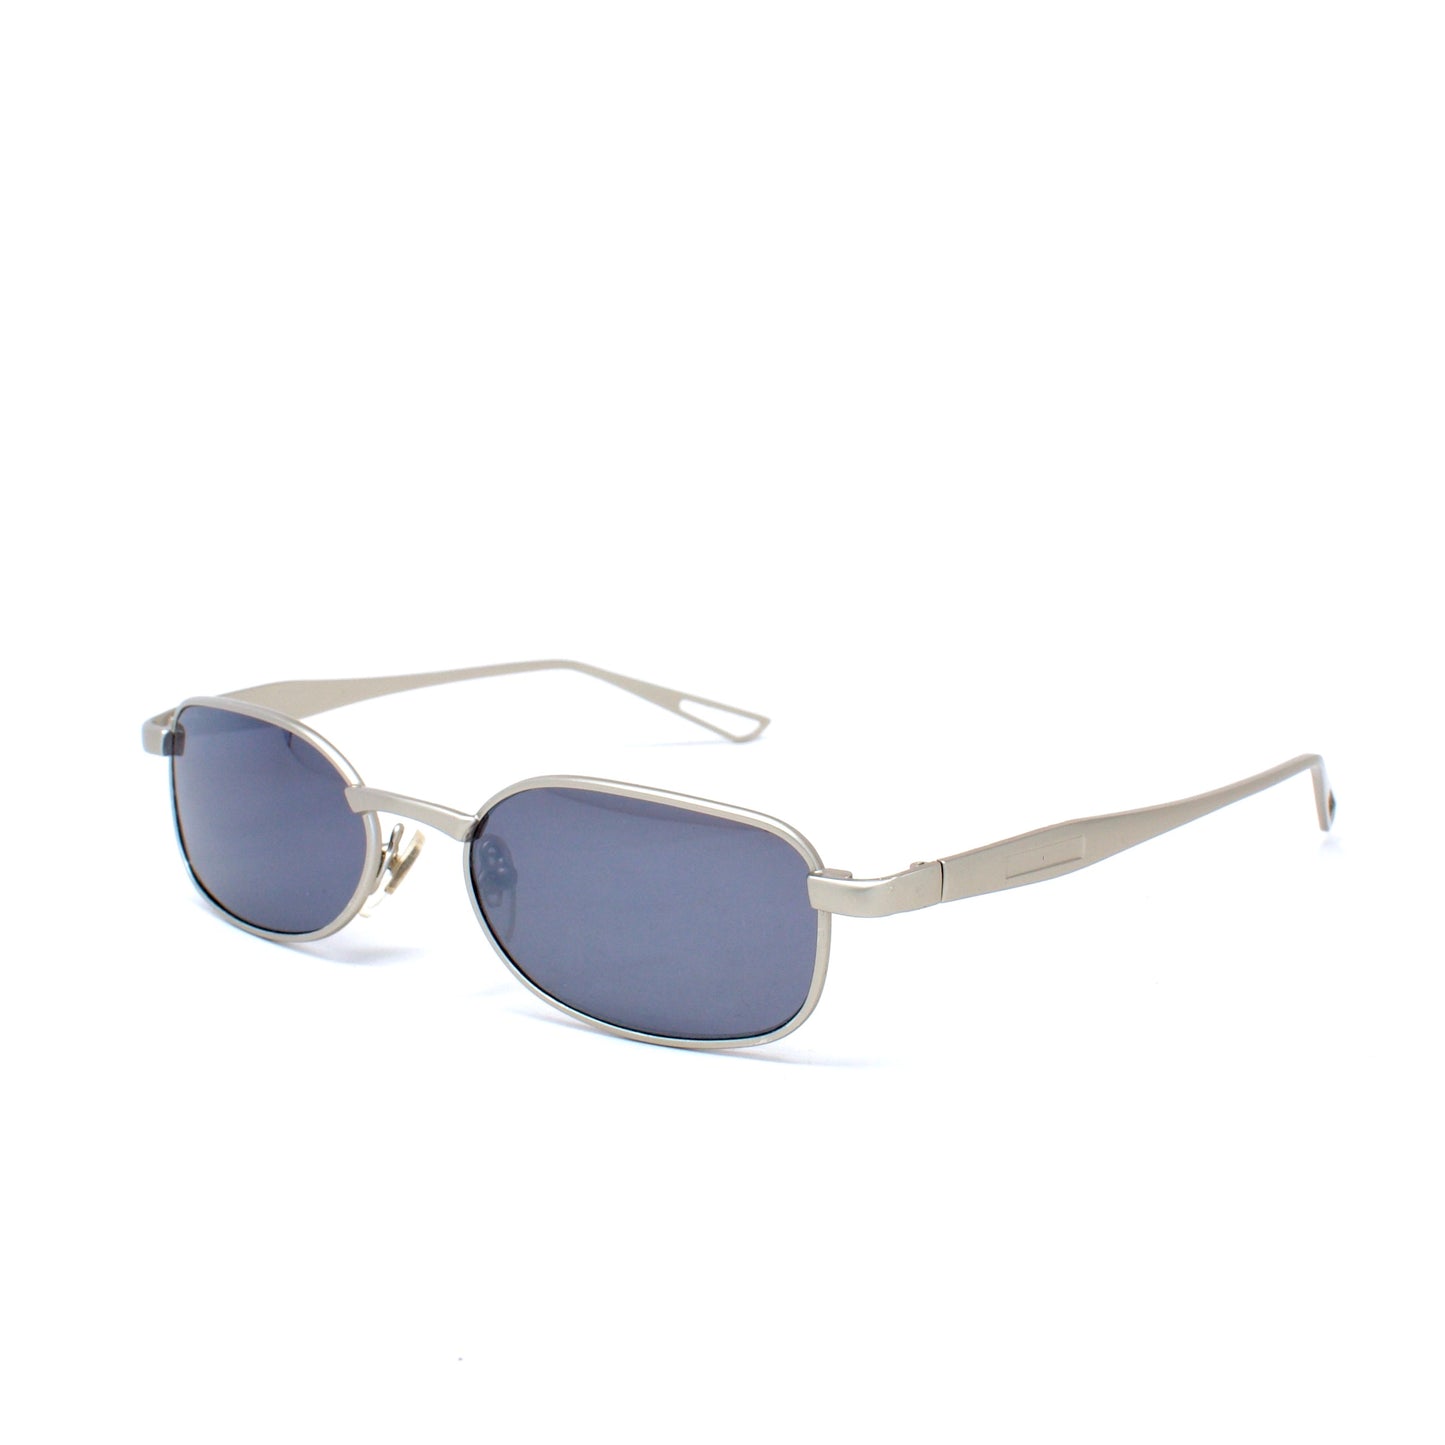 Vintage Small Size 1990s Matrix Style Rectangle Shape Sunglasses - Light Silver